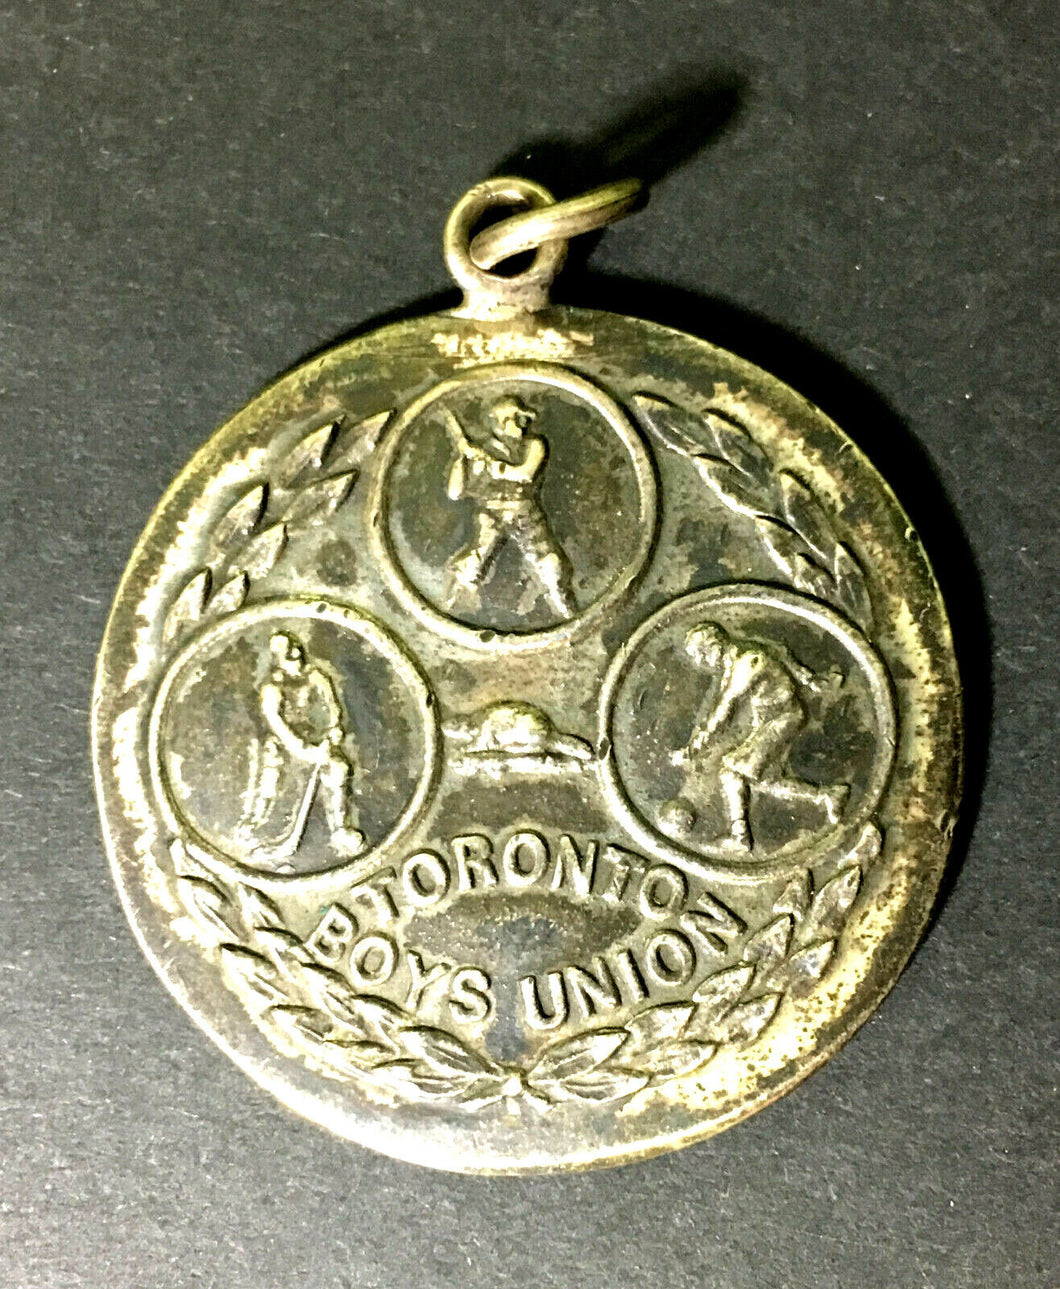 1914 Toronto Boys Union Sterling Medal Best All Round Baseball Football Hockey